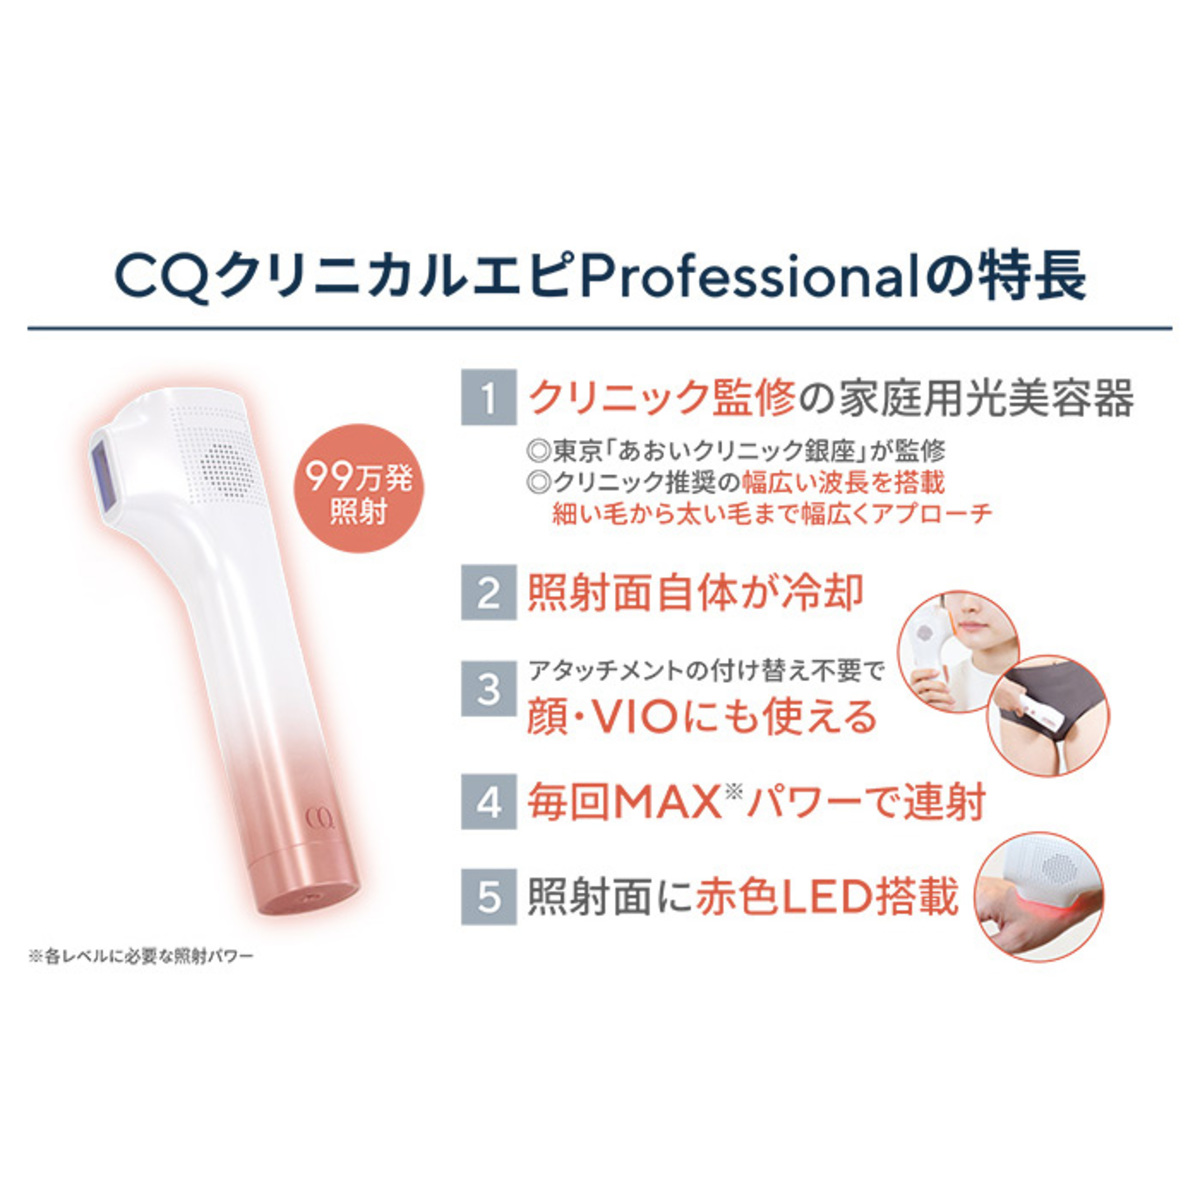 CQクリニカルエピプロフェッショナル シーキュー（CQ） - QVC.jp